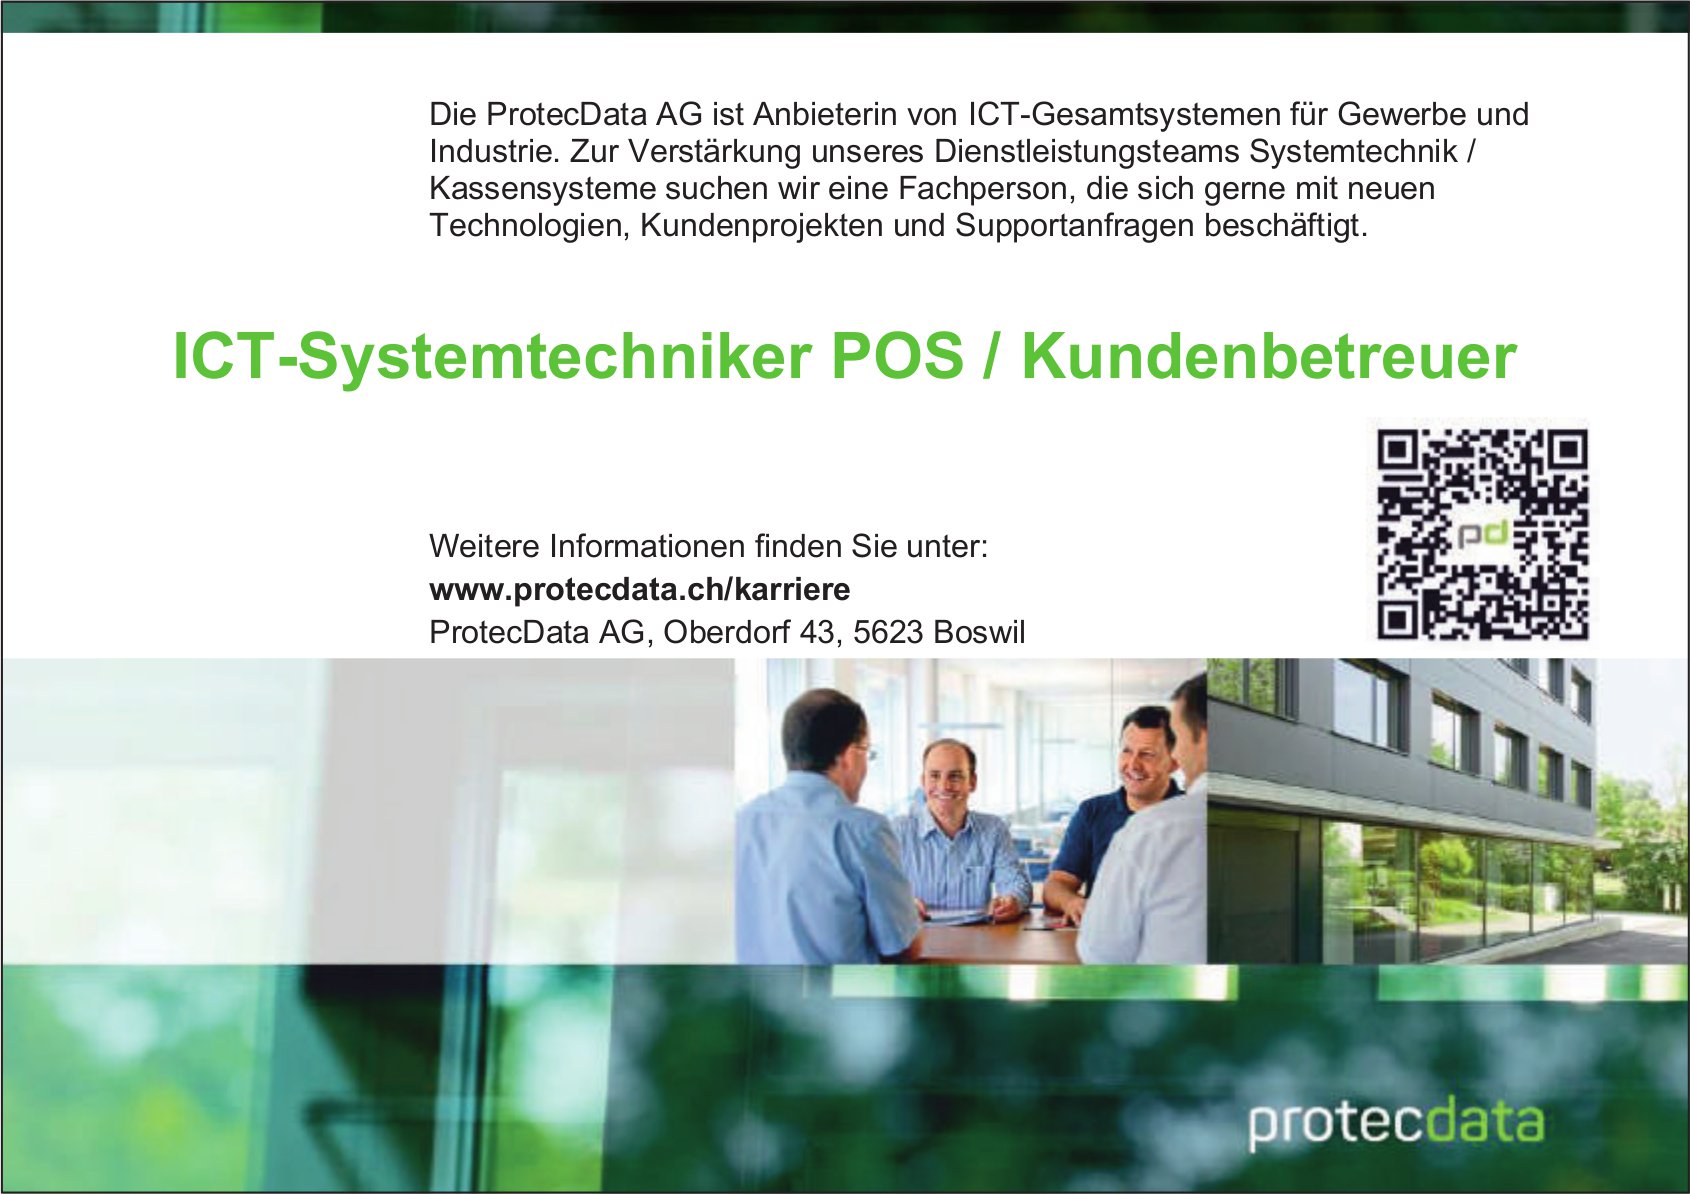 ICT-Systemtechniker POS / Kundenbetreuer, ProtecData AG, Boswil, gesucht